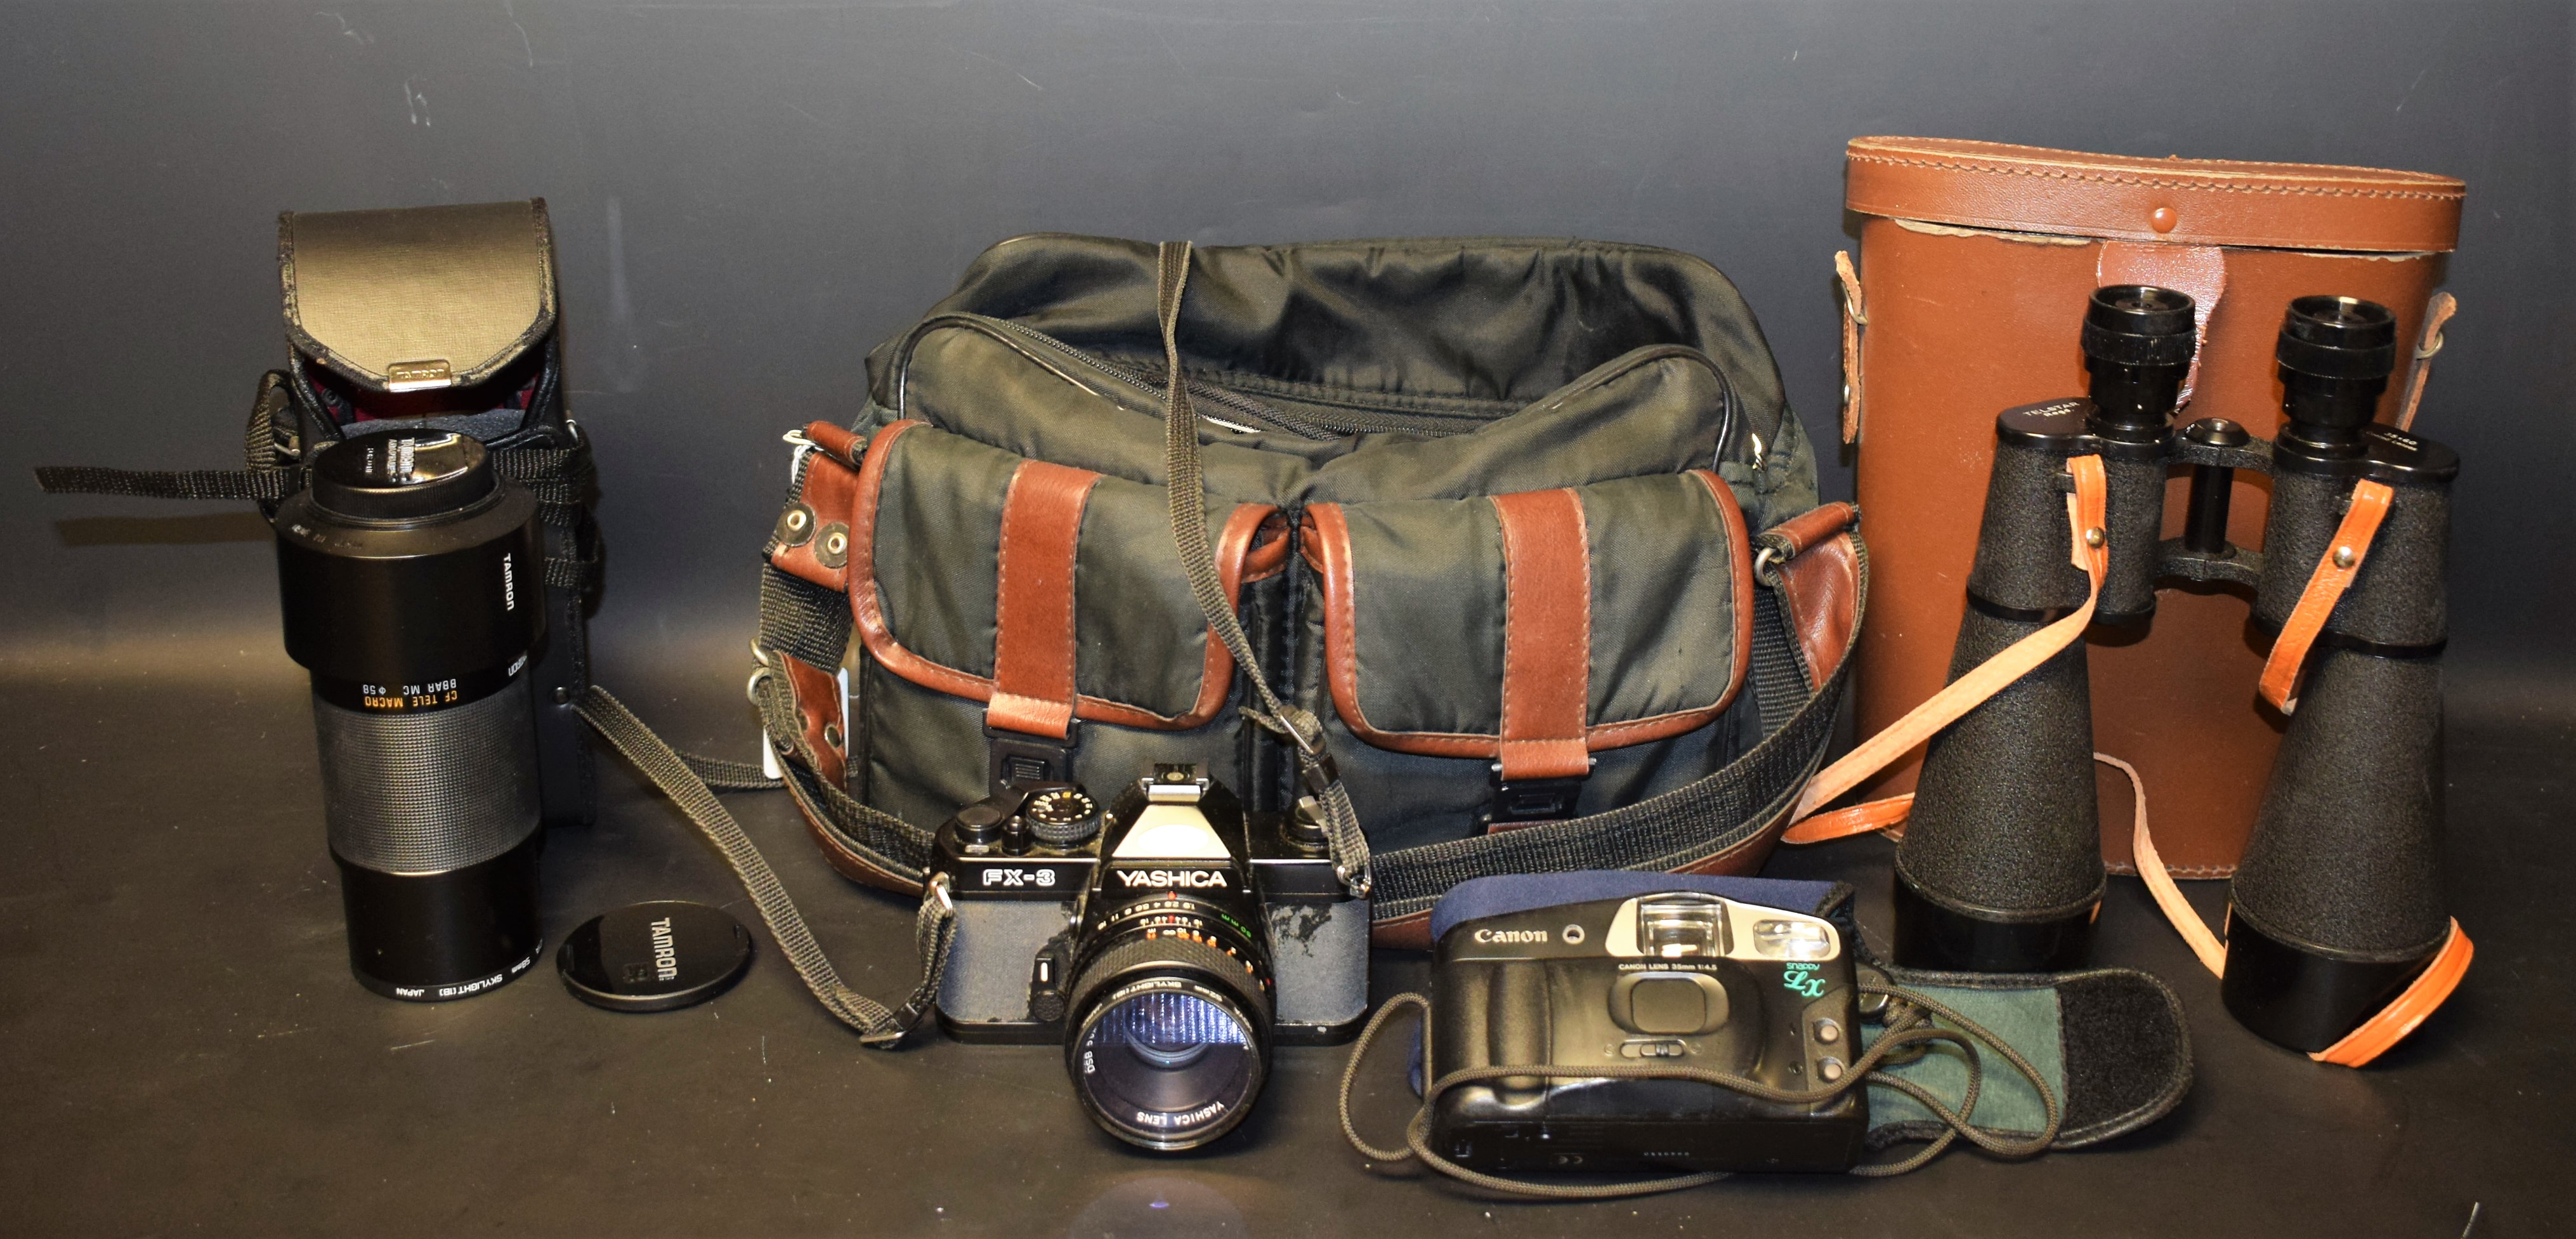 Photographic Equipment - a Yashica SLR camera; a Canon camera; a Tamron Adaptall lens in case;